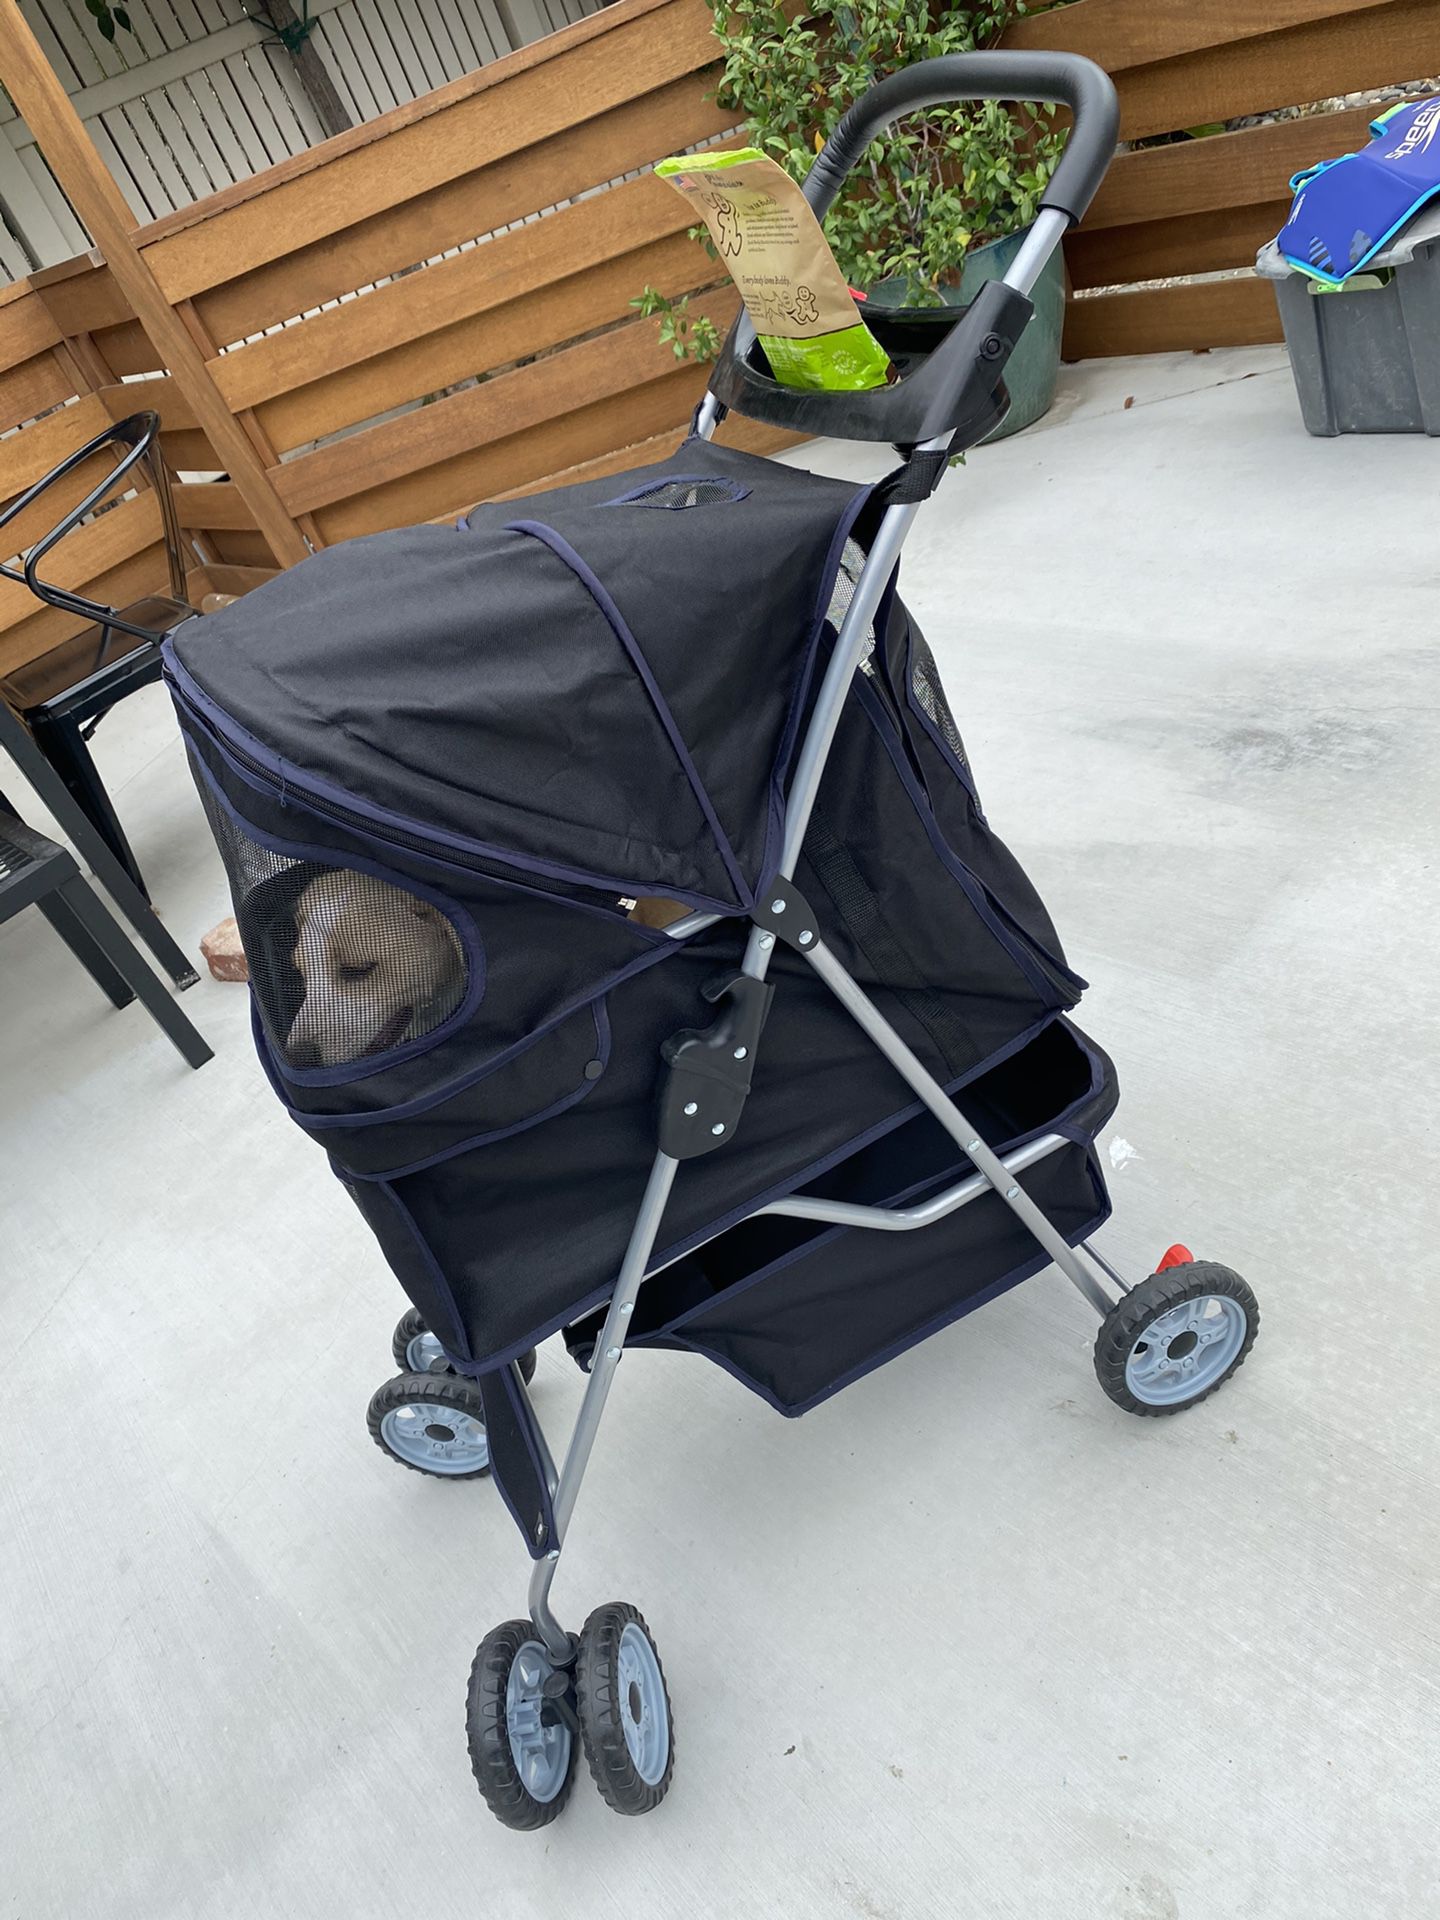 Doggy stroller